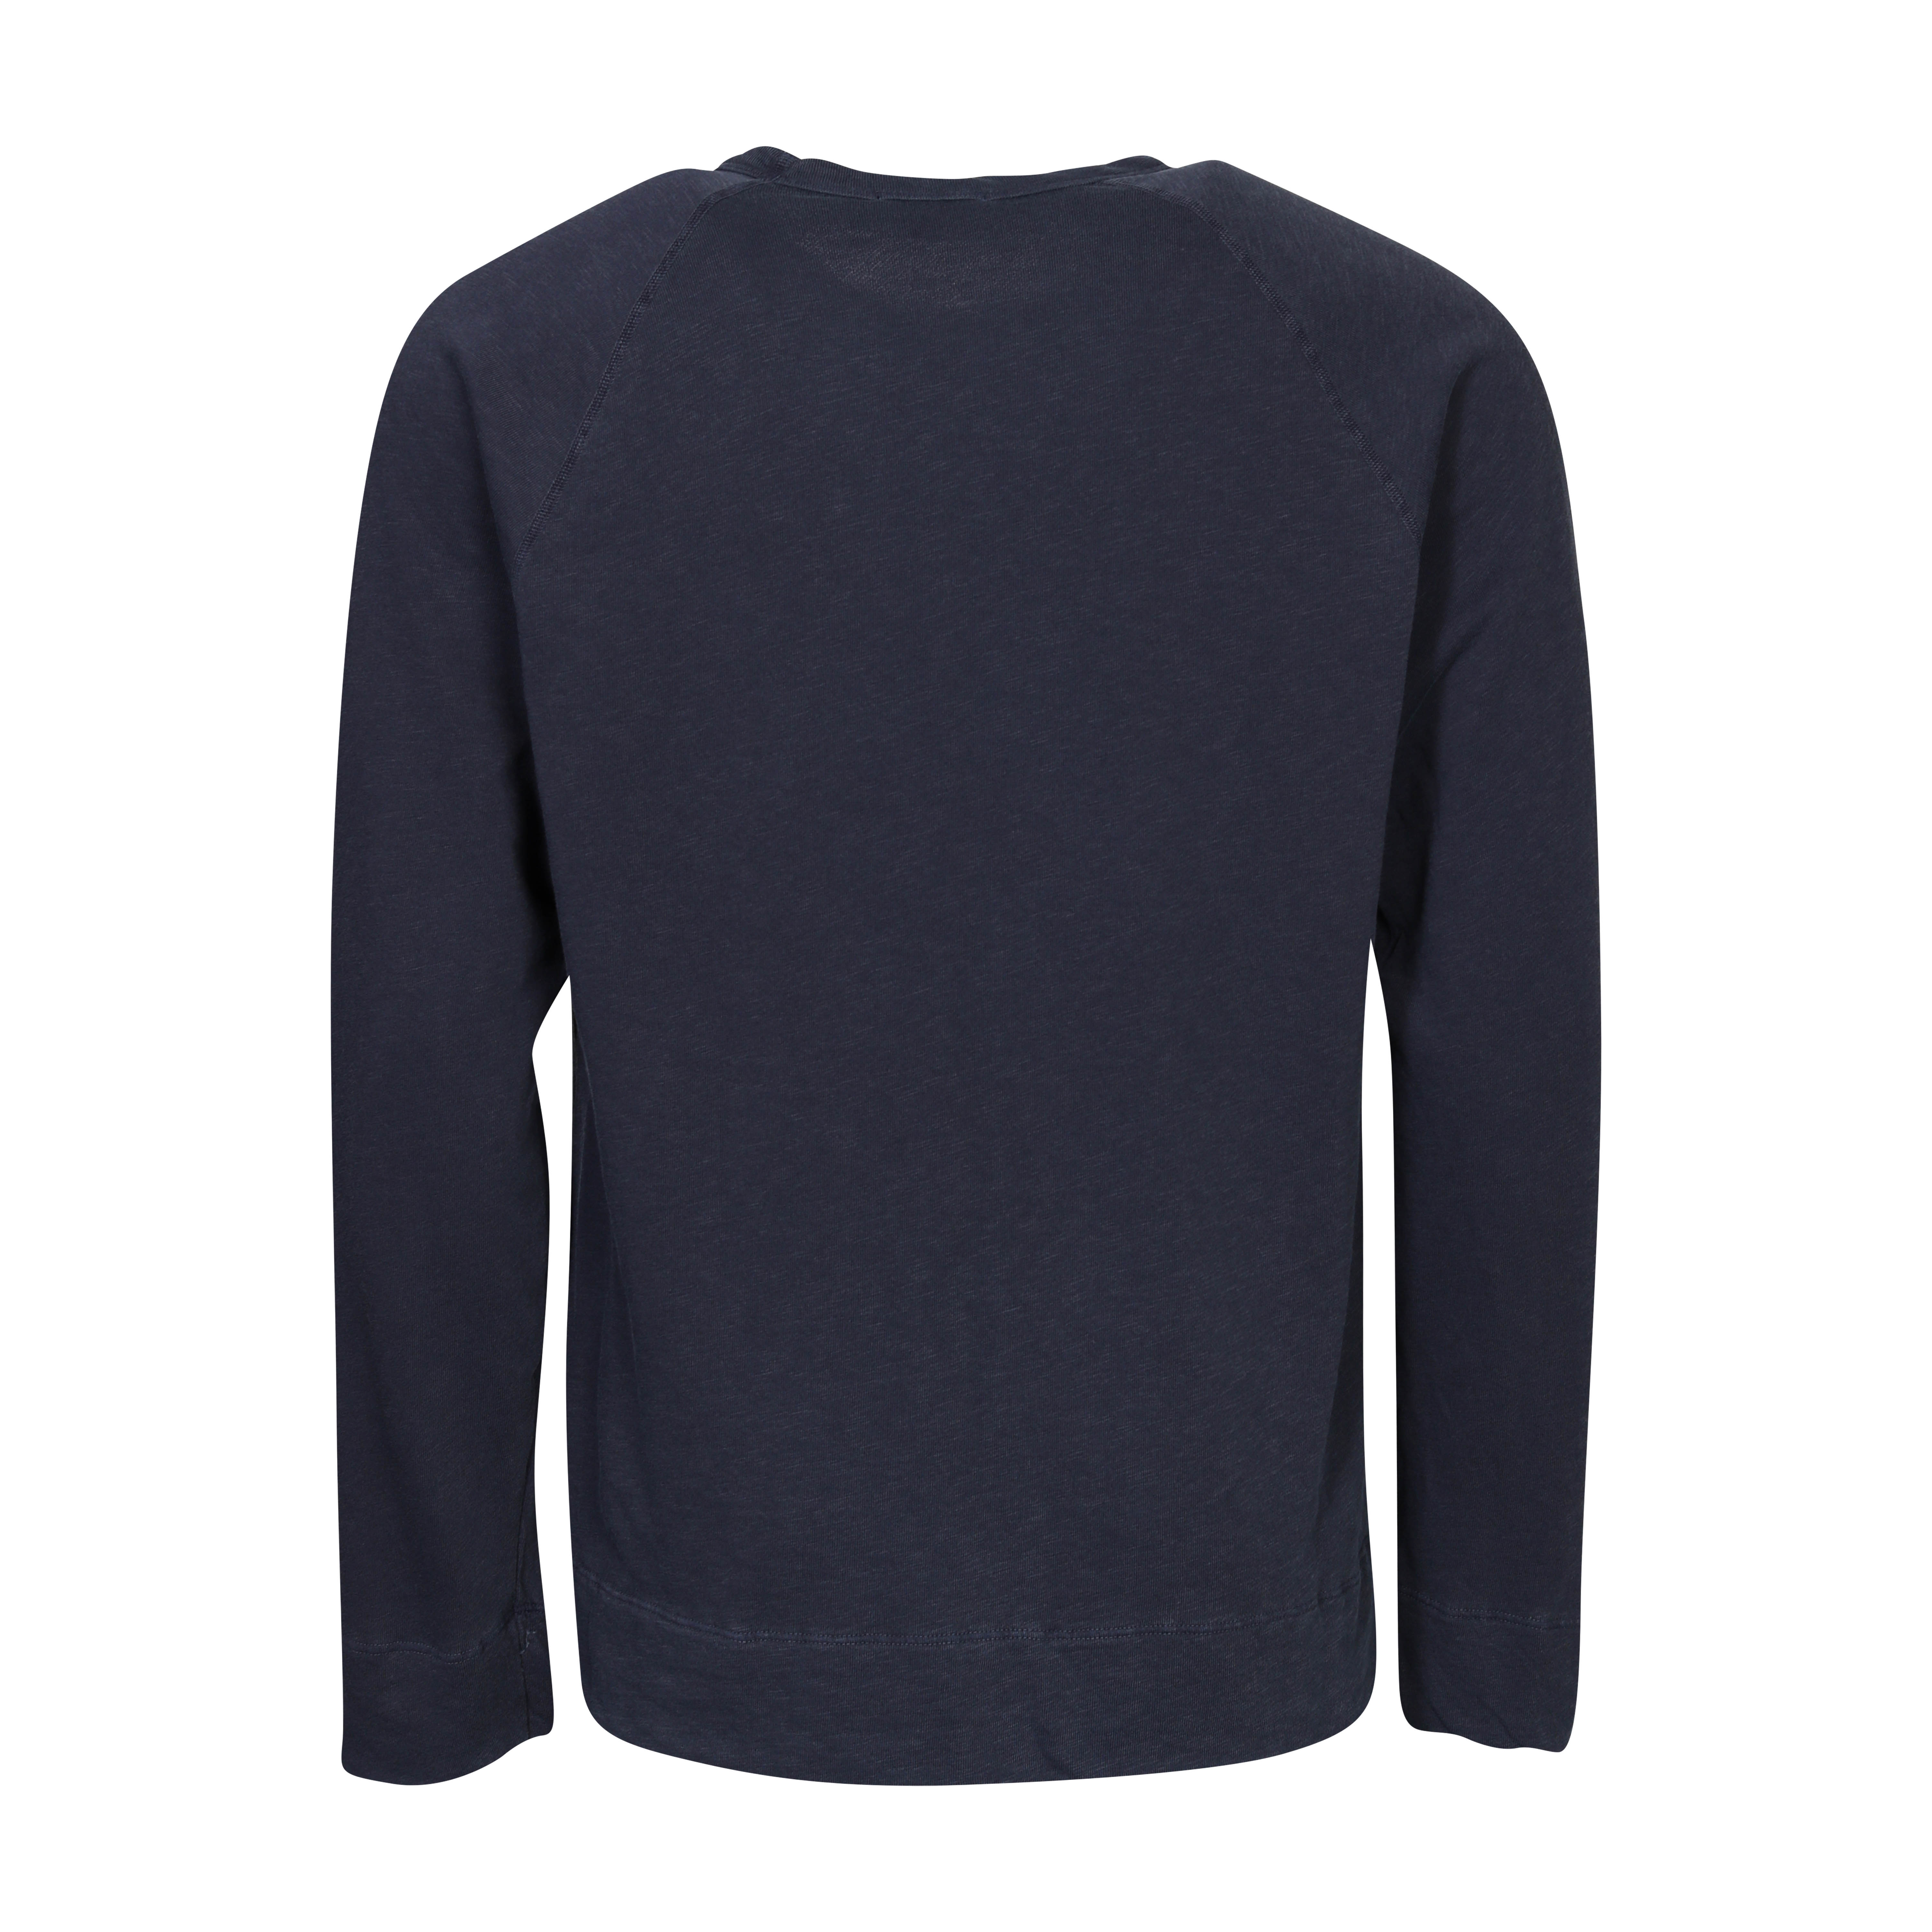 James Perse Vintage Cotton Raglan Sweater in Deep 5/XXL